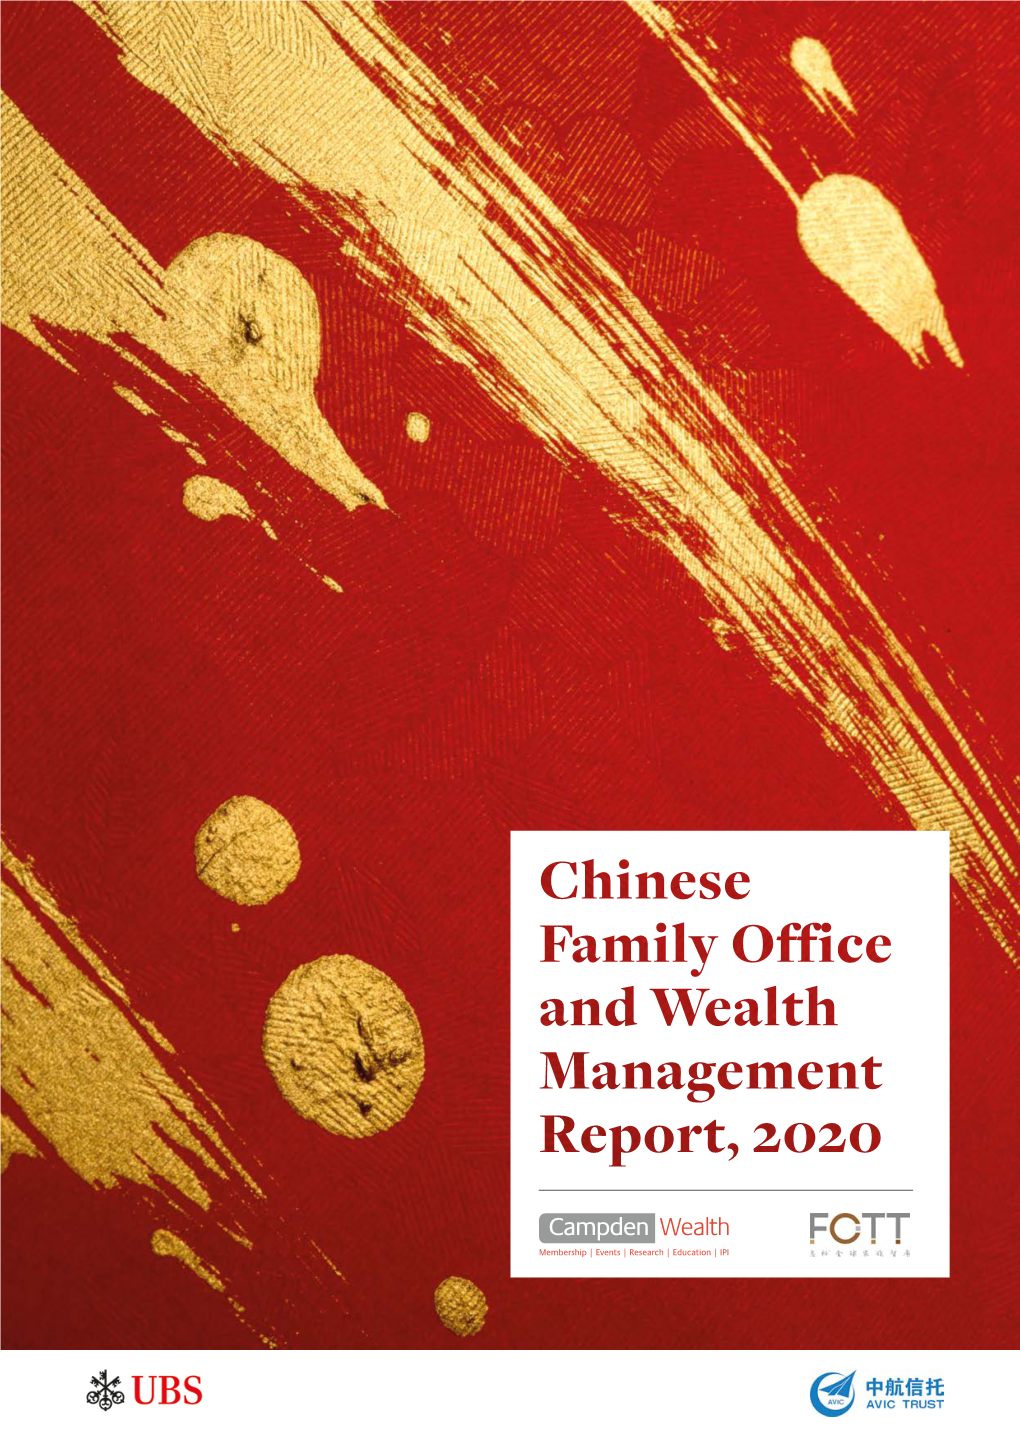 Gfo-China-Report-Single.Pdf